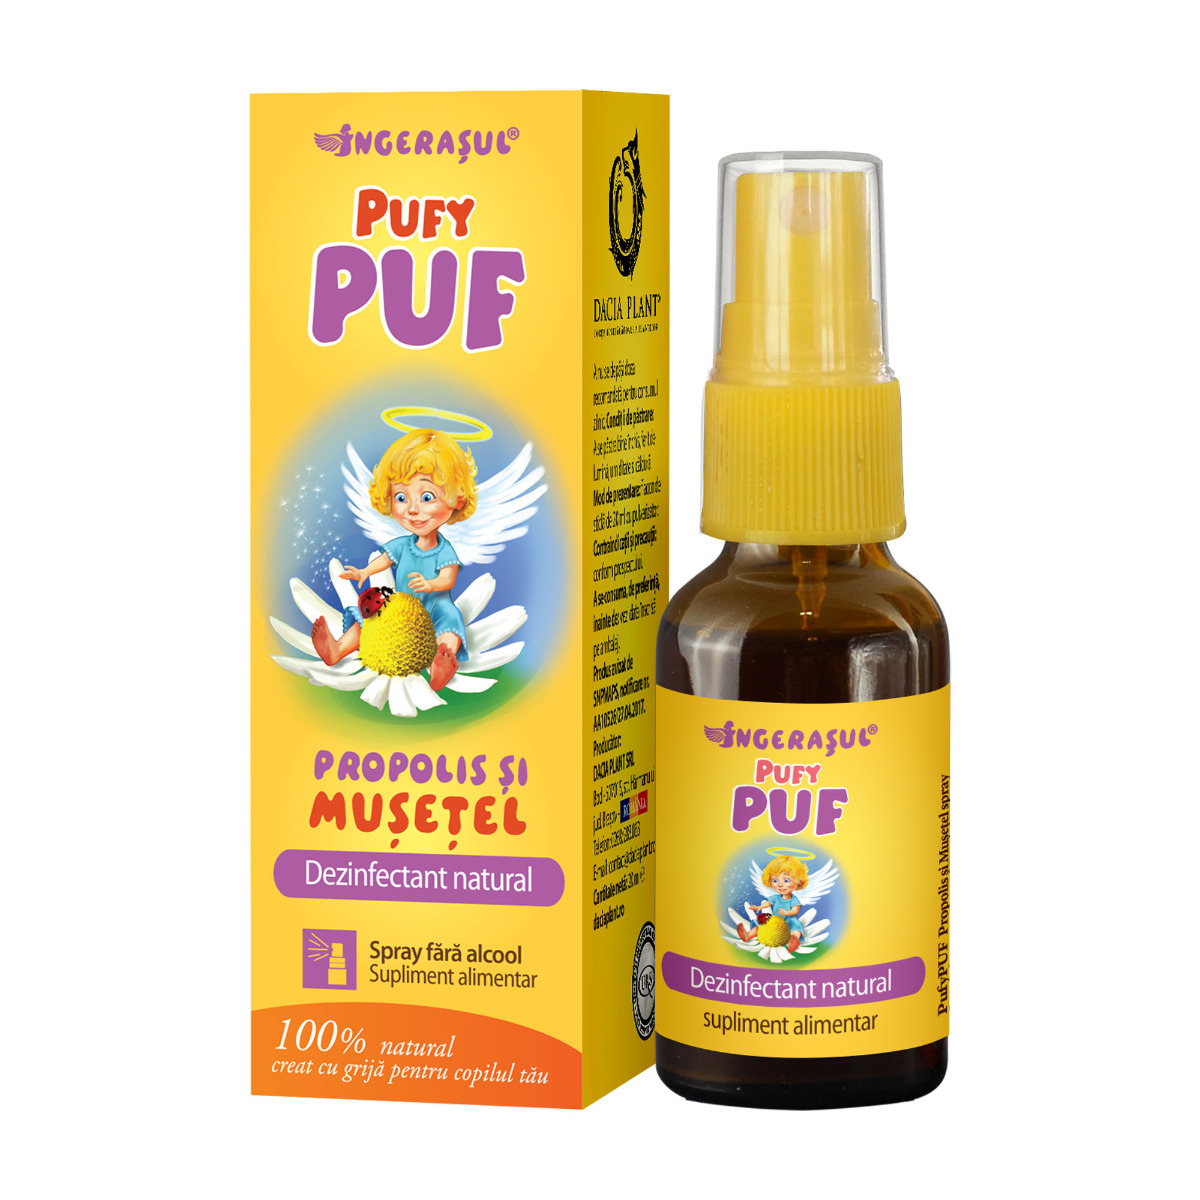 PufyPUF Propolis si Musetel spray – protejeaza aparatul respirator daciaplant.ro